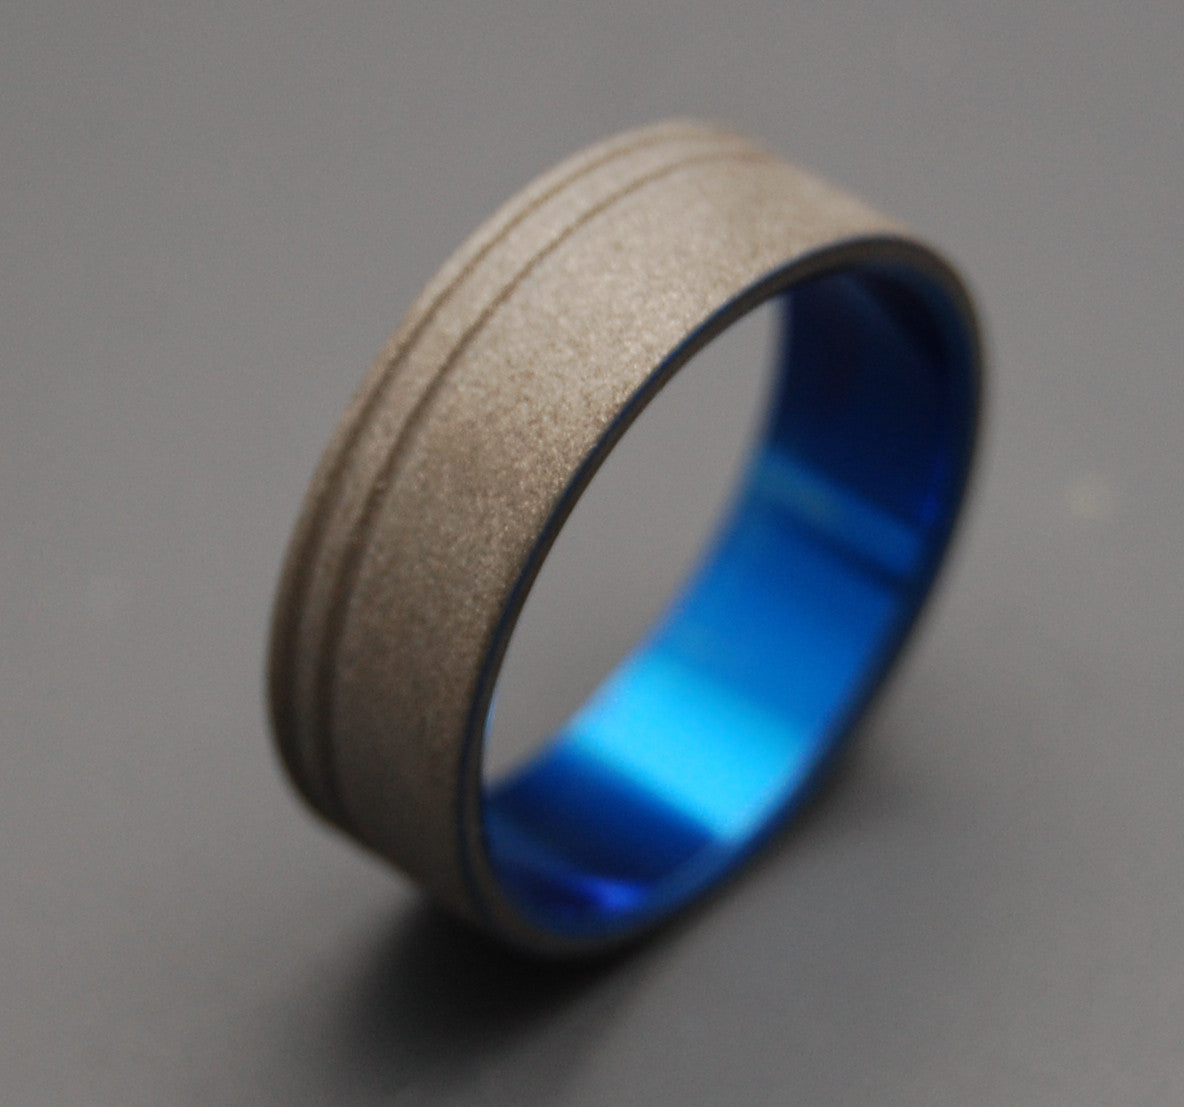 TO THE FUTURE BLUE | Sandblasted Titanium Rings - Unique Men's Wedding Rings - Minter and Richter Designs